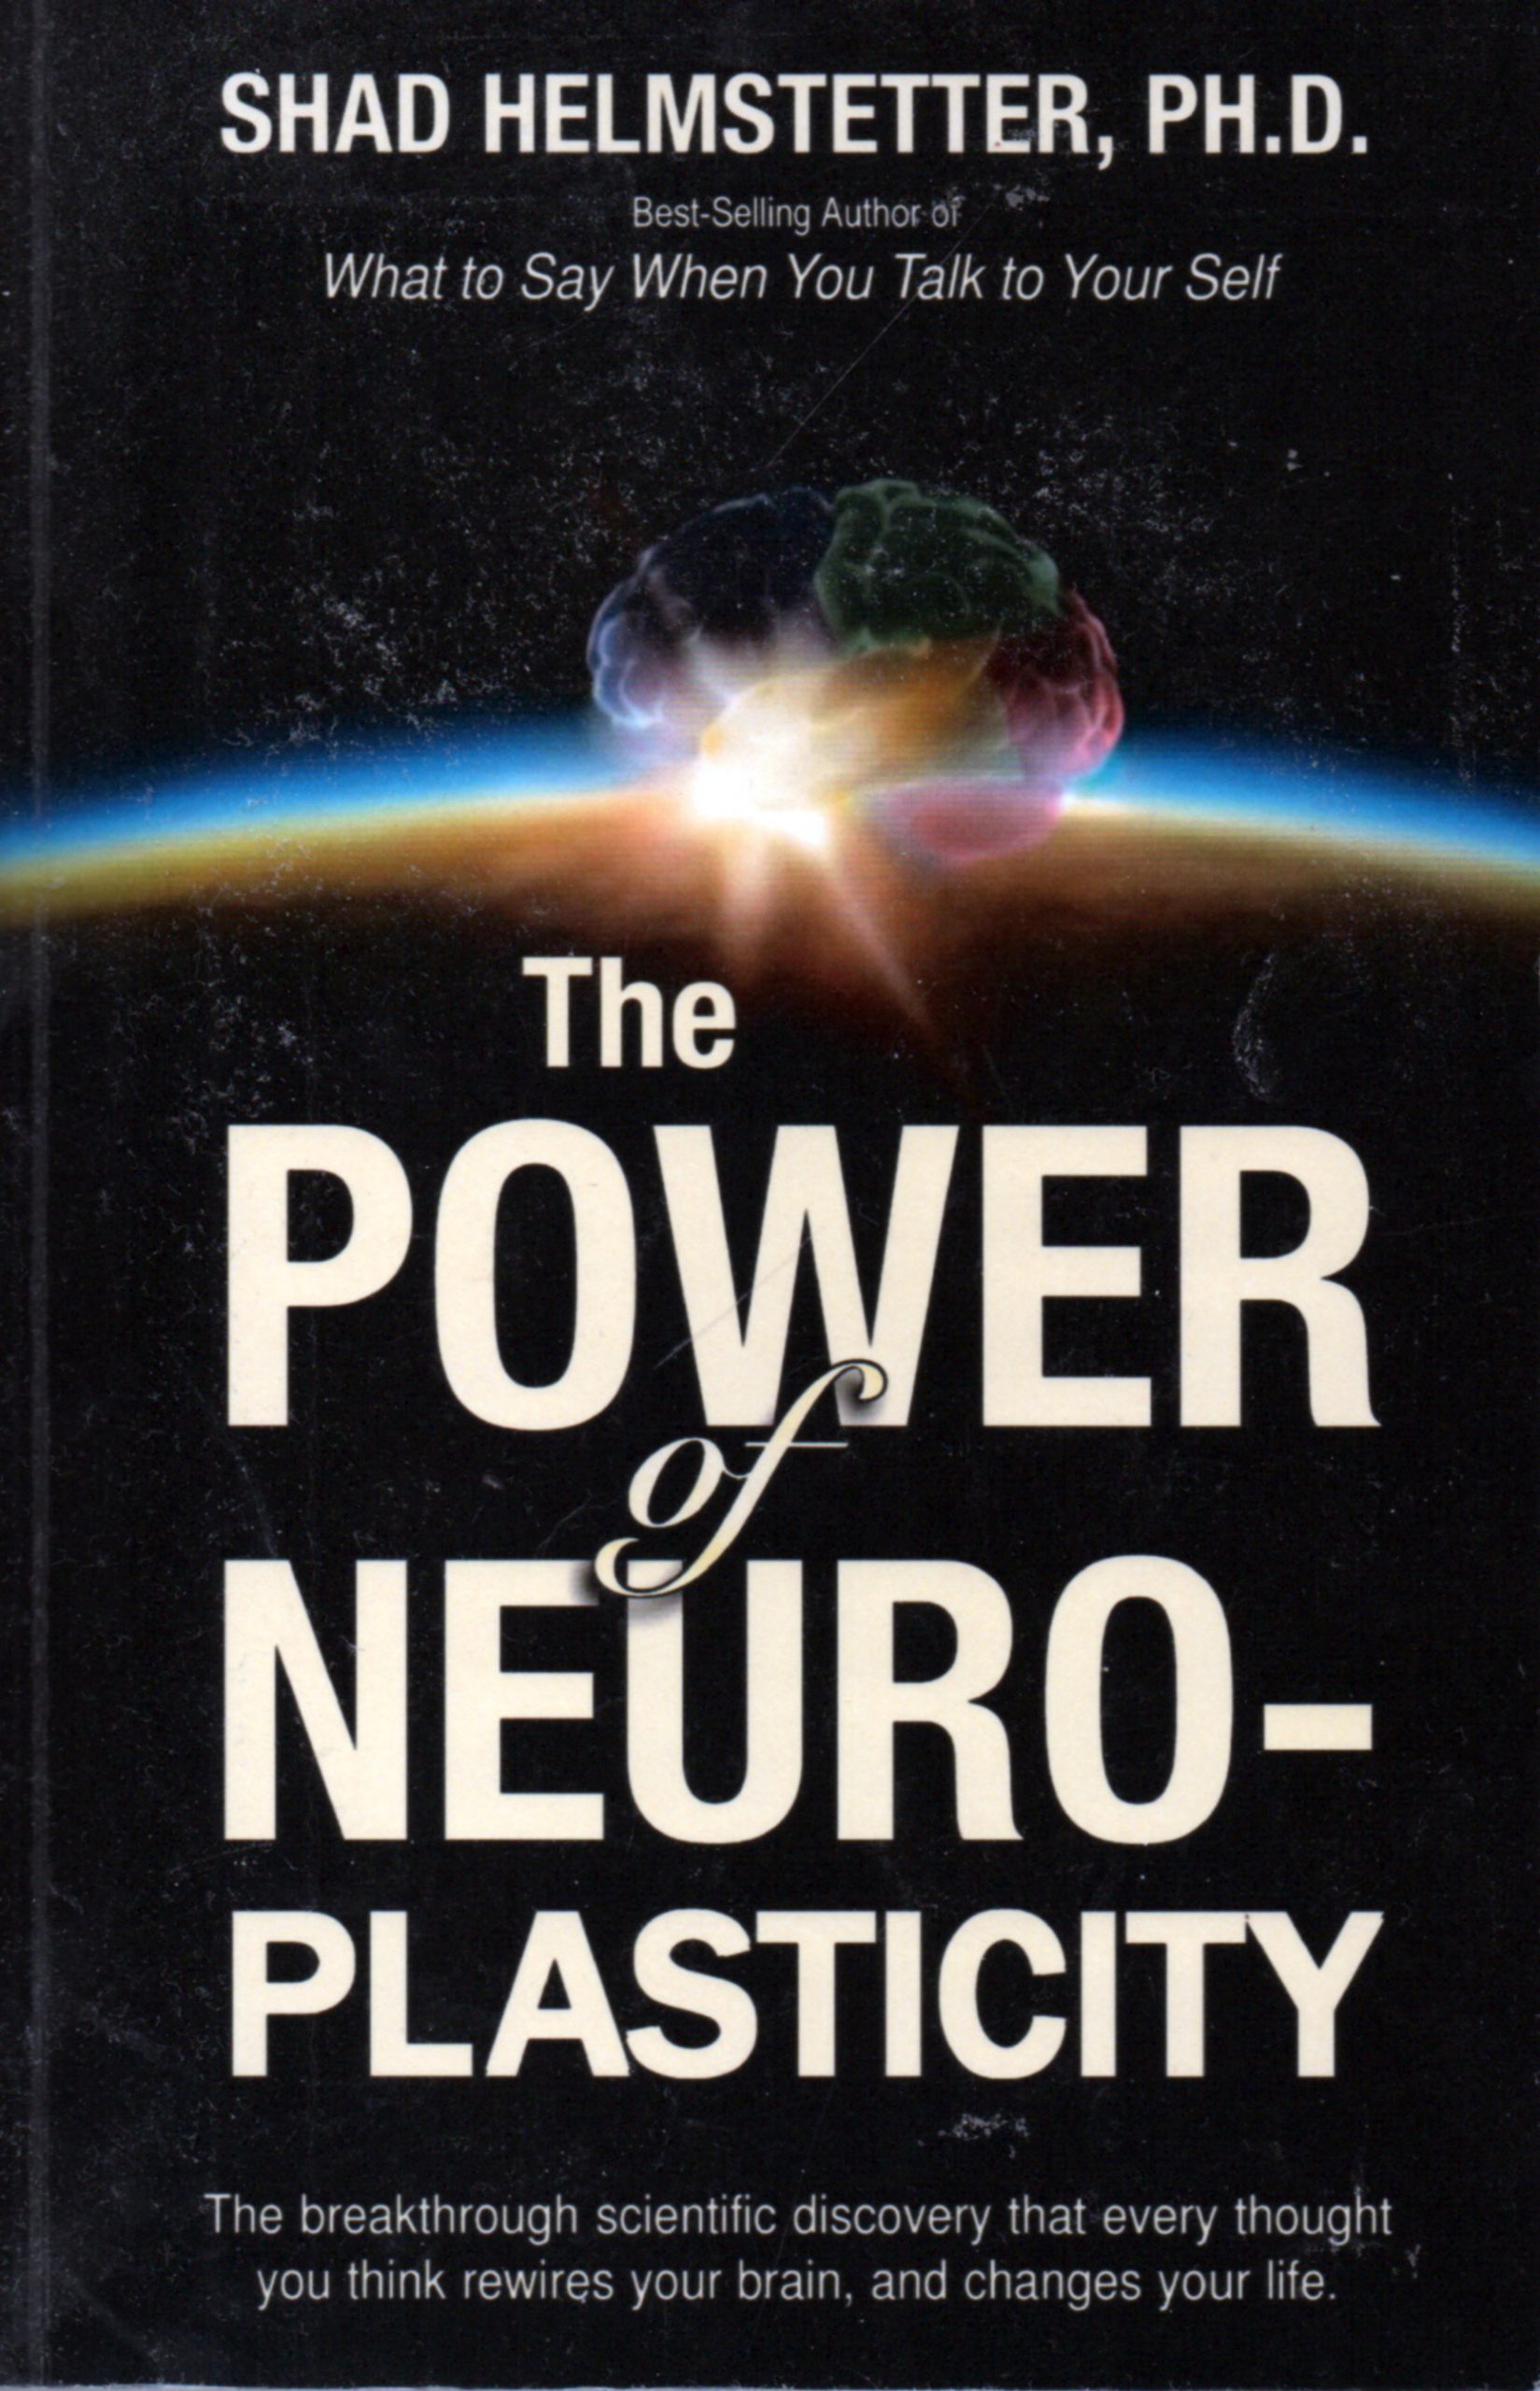 The Power of Neuro Plasticity